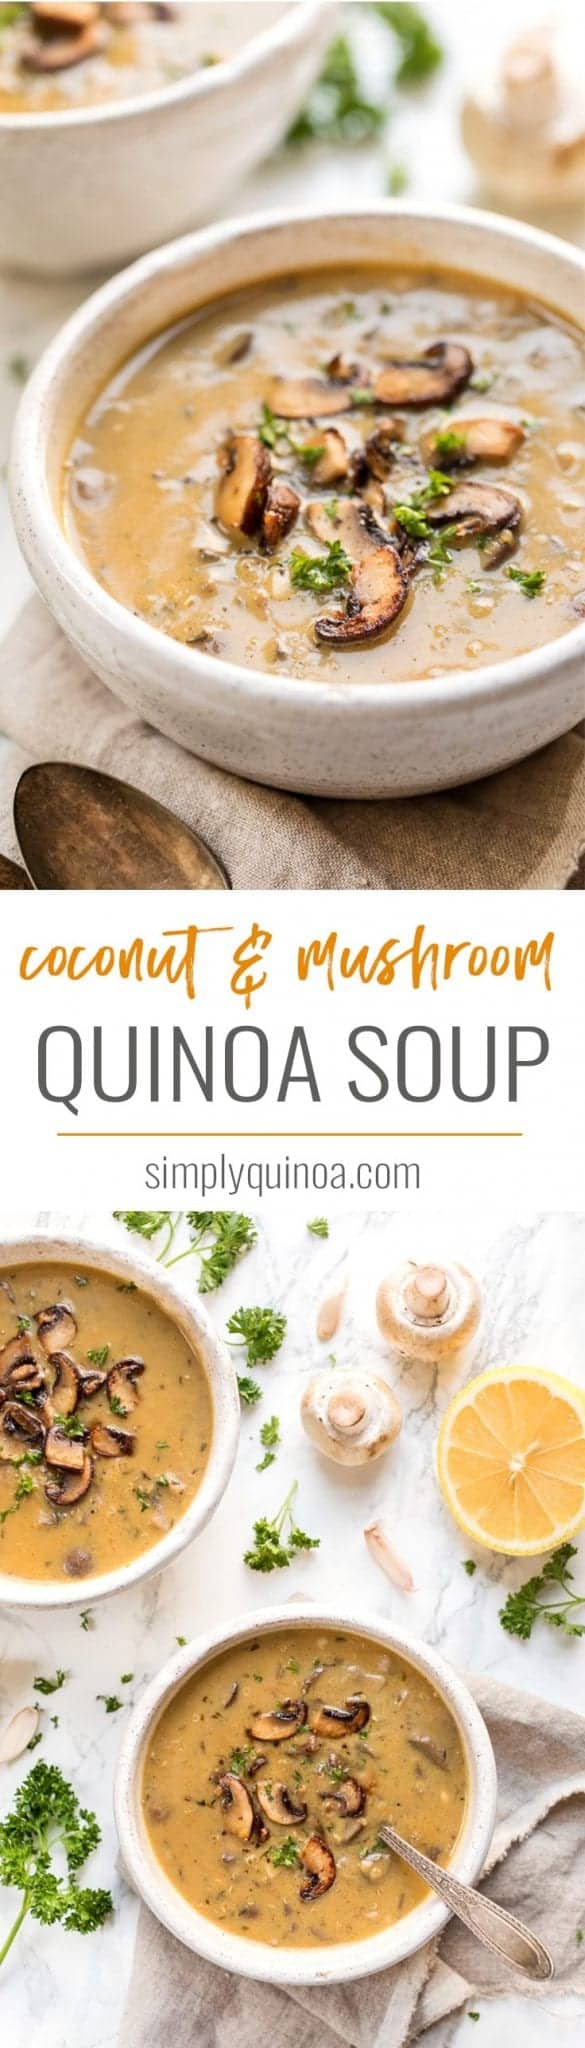 a creamy coconut & mushroom quinoa soup served with sauteed mushrooms